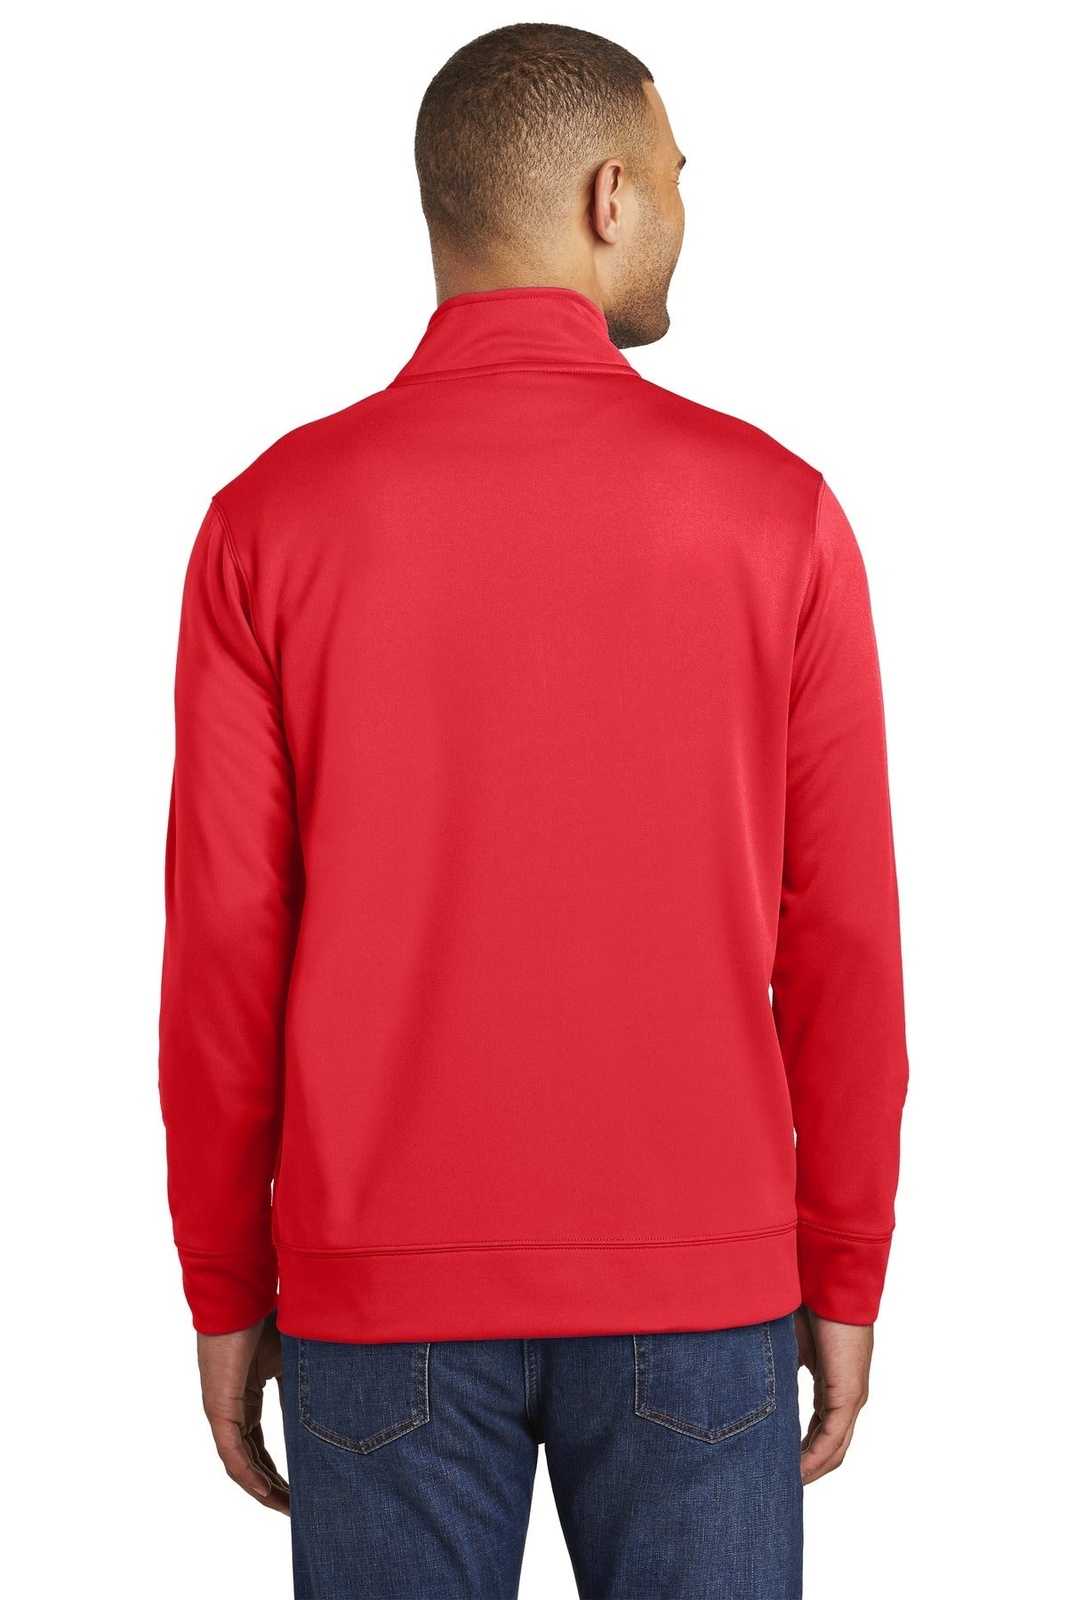 Port &amp; Company PC590Q Fleece 1/4-Zip Pullover Sweatshirt - Red - HIT a Double - 2